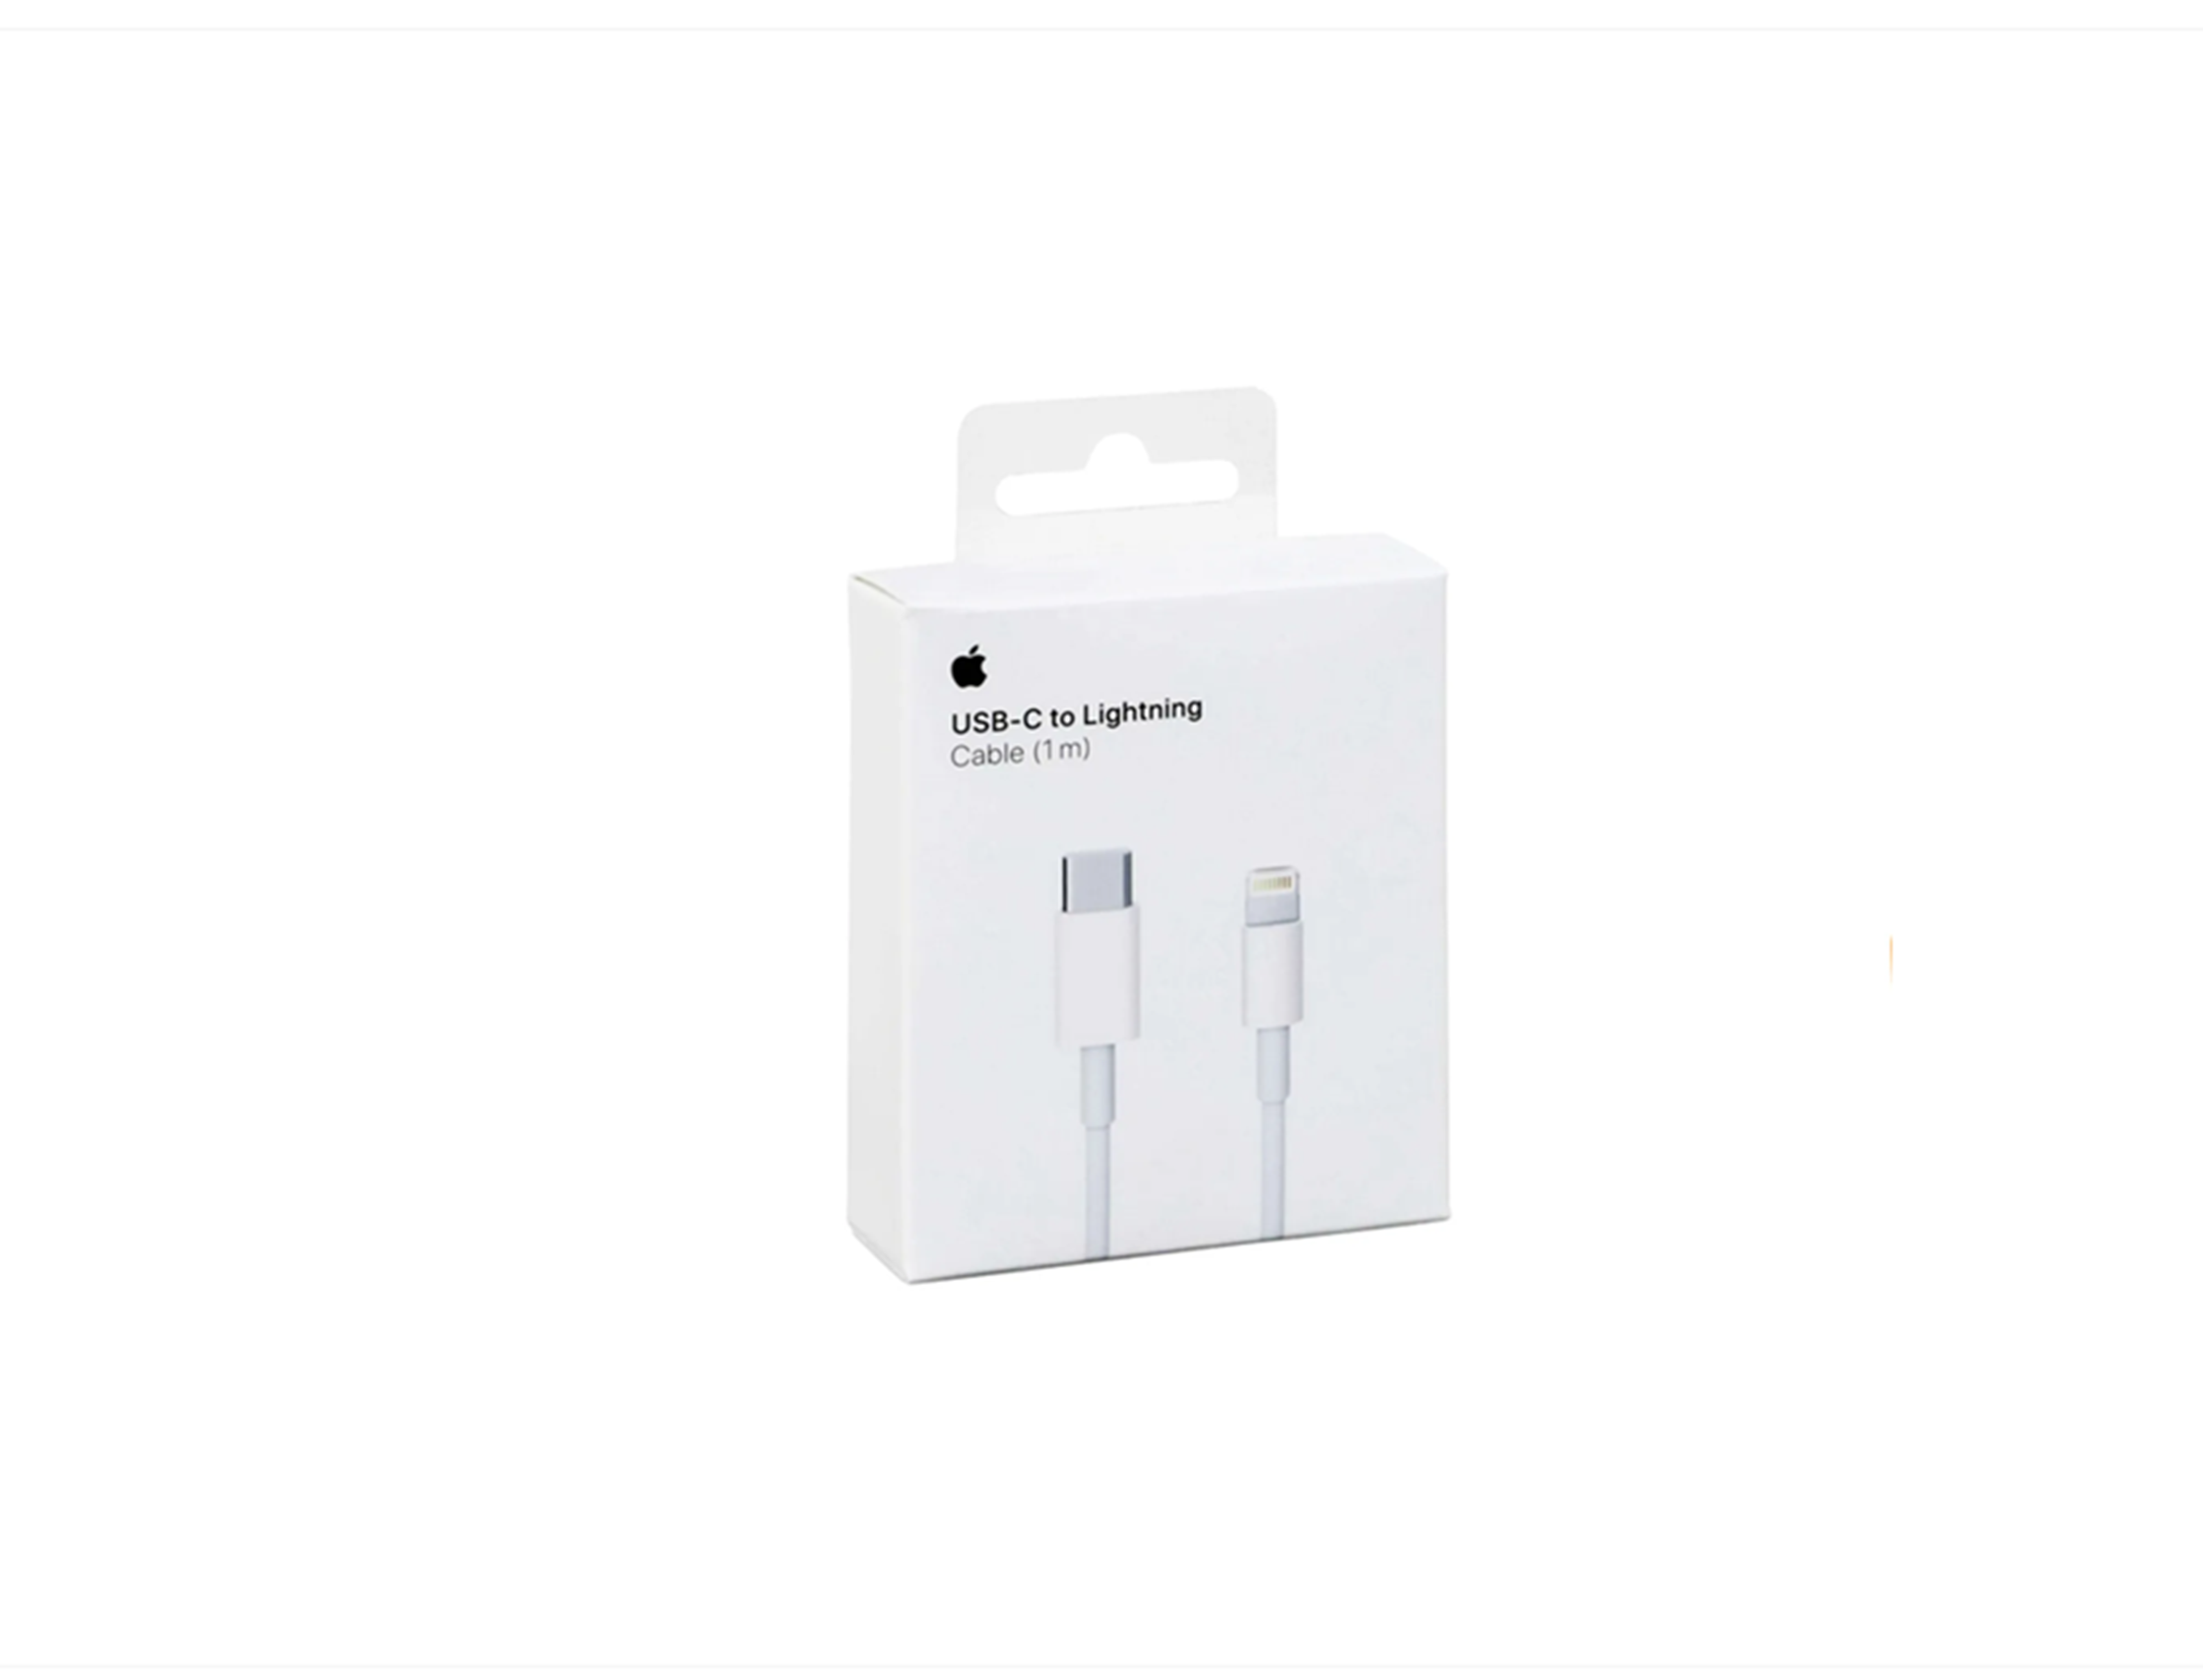 Apple iPhone 11 20W Ladegerät MHJE3ZM/A + 1m USB‑C auf Lightning Ladekabel MQGJ2ZE/A